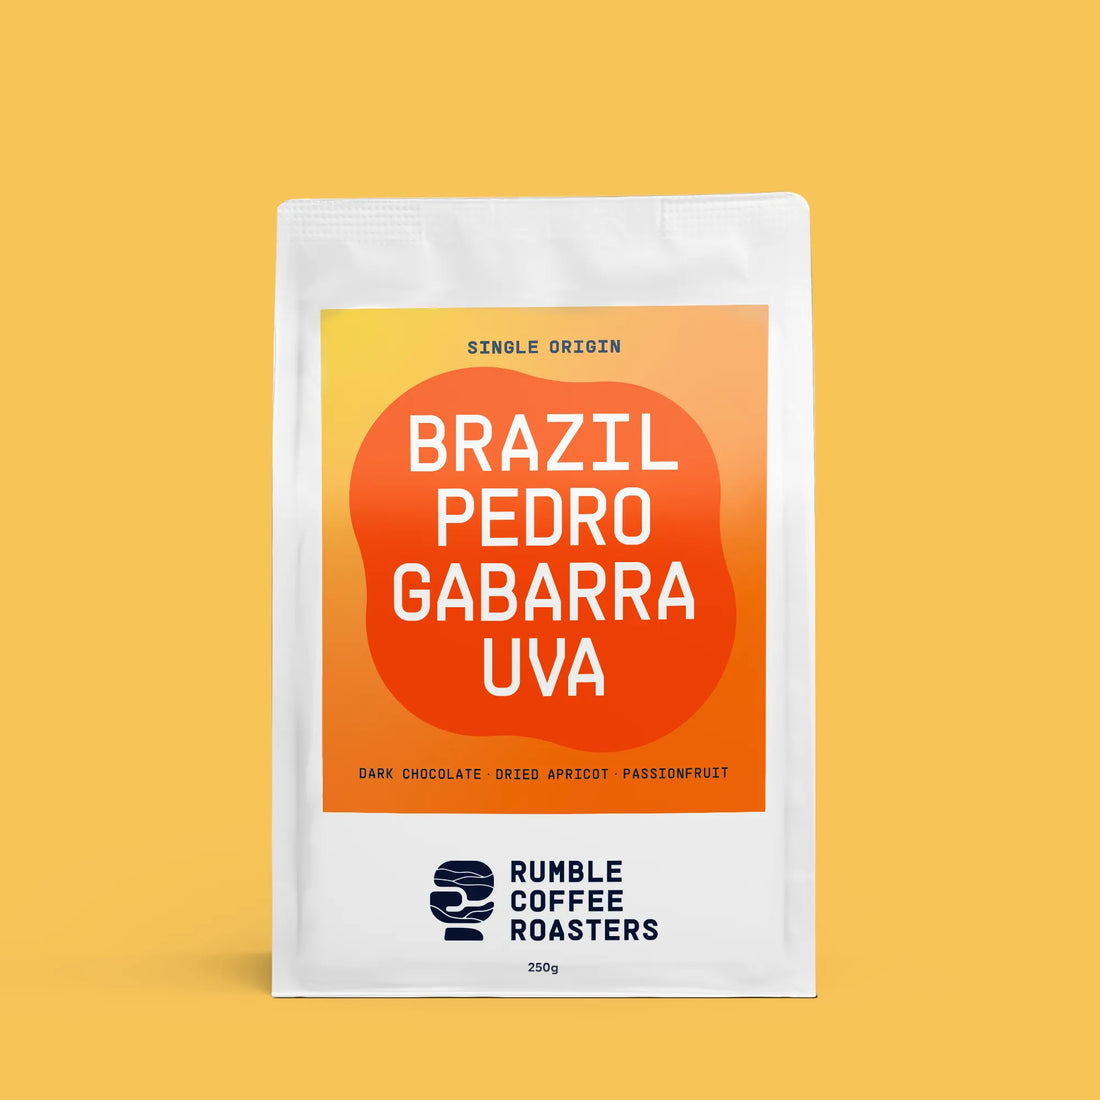 Brazil Pedro Gabarra Uva Espresso